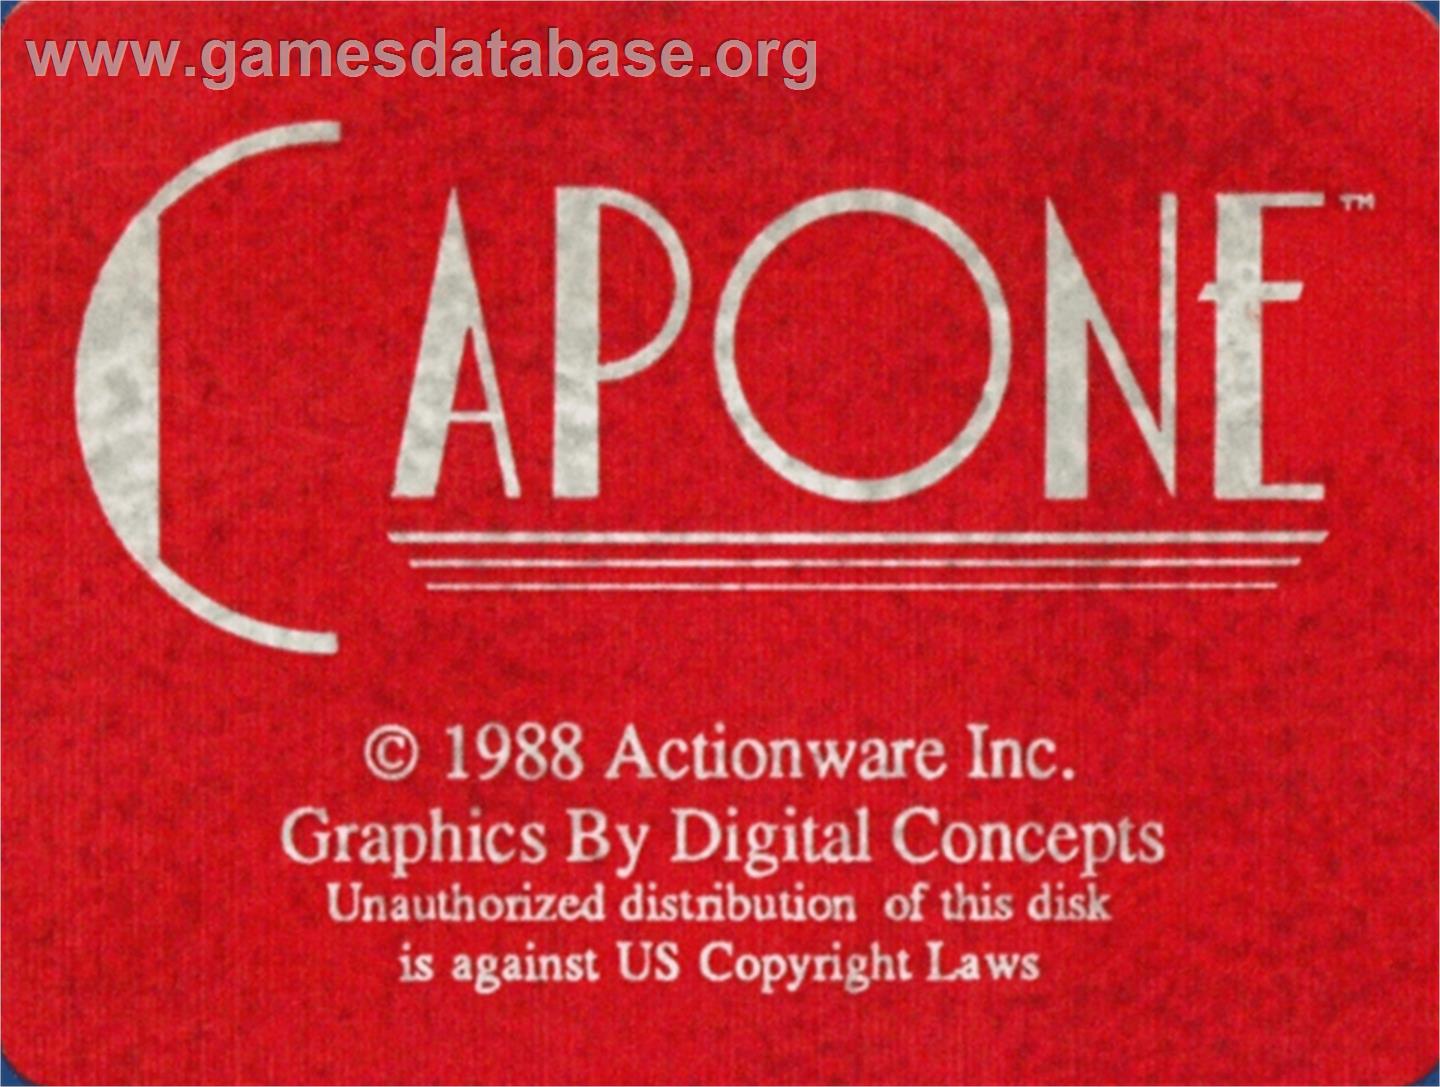 Capone - Commodore Amiga - Artwork - Cartridge Top